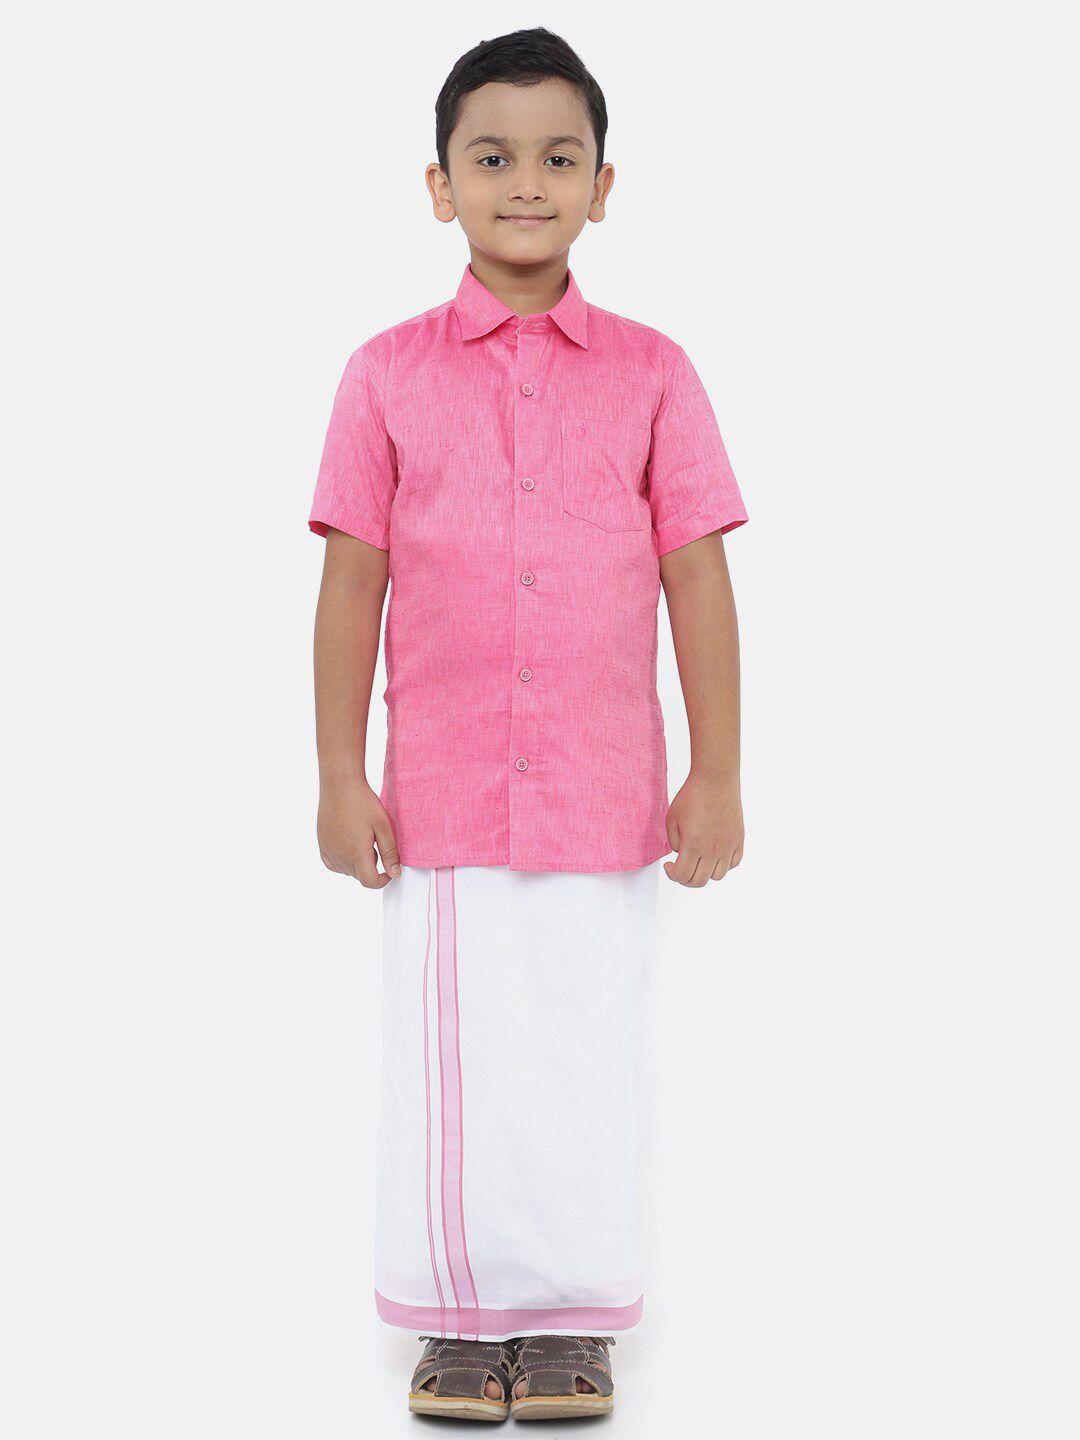 littlestars boys pink & white pure cotton shirt with dhoti